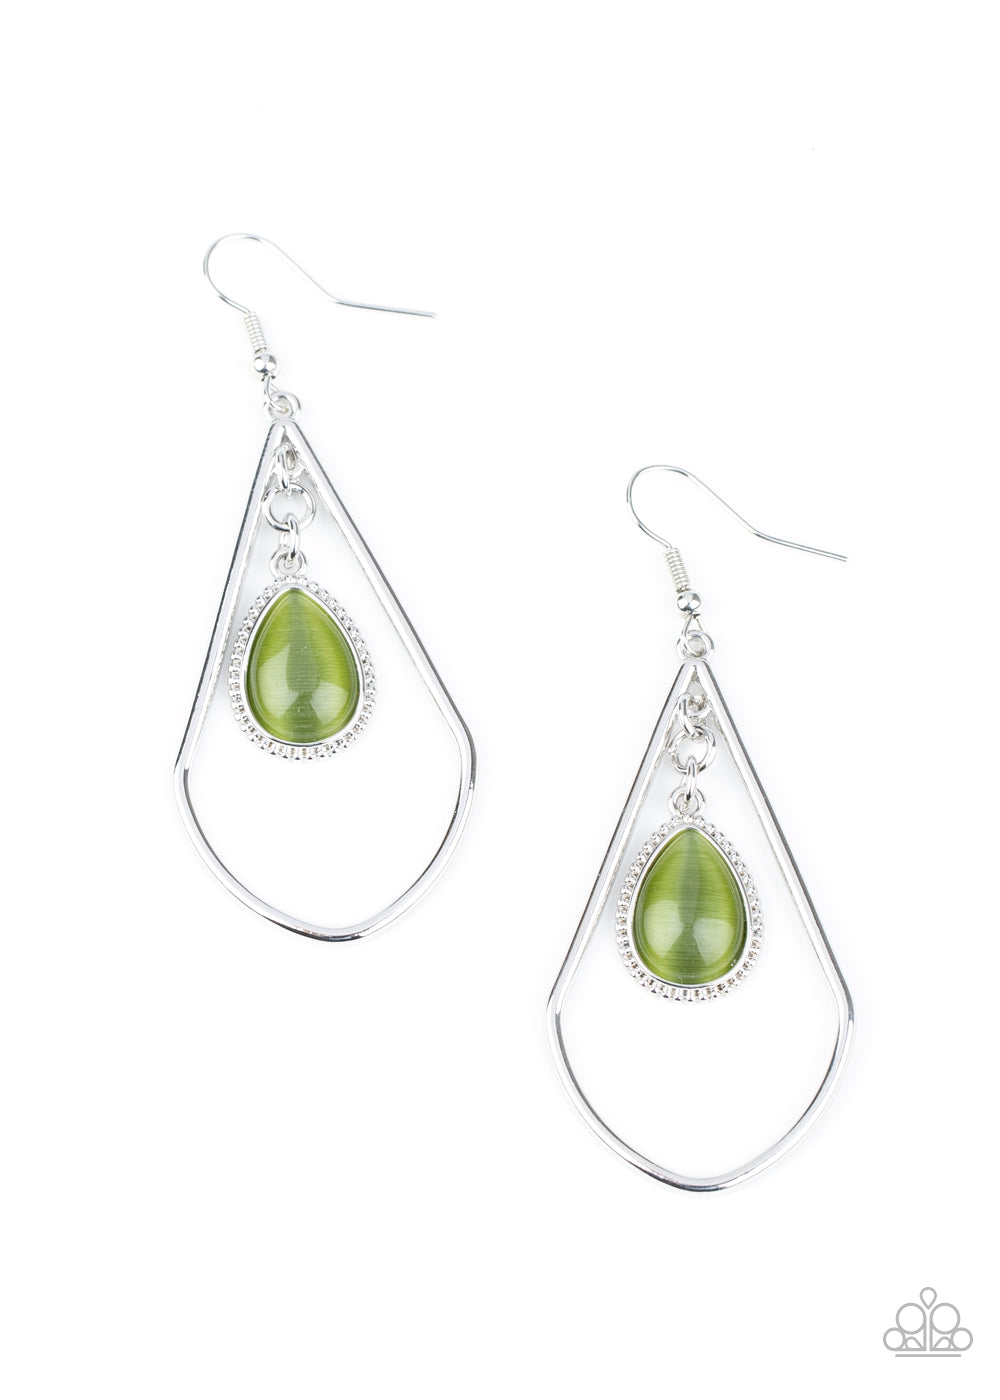 Paparazzi Earring ~ Ethereal Elegance - Green Moonstone Earring